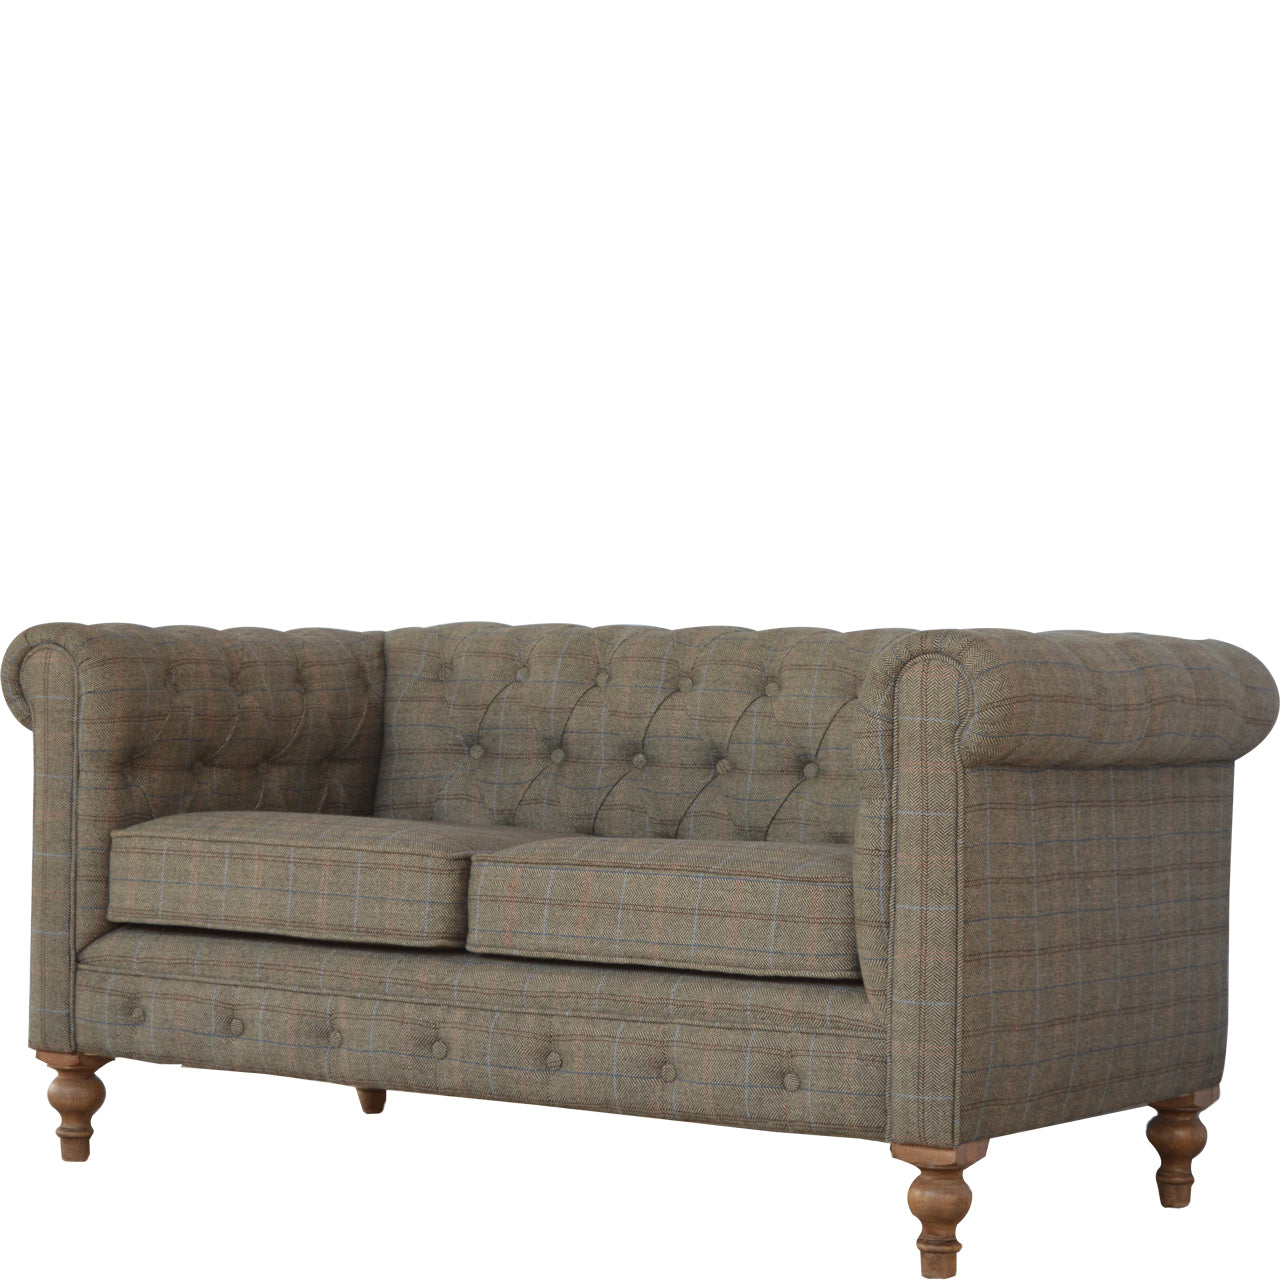 Multi Tweed 2 Seater Chesterfield Sofa